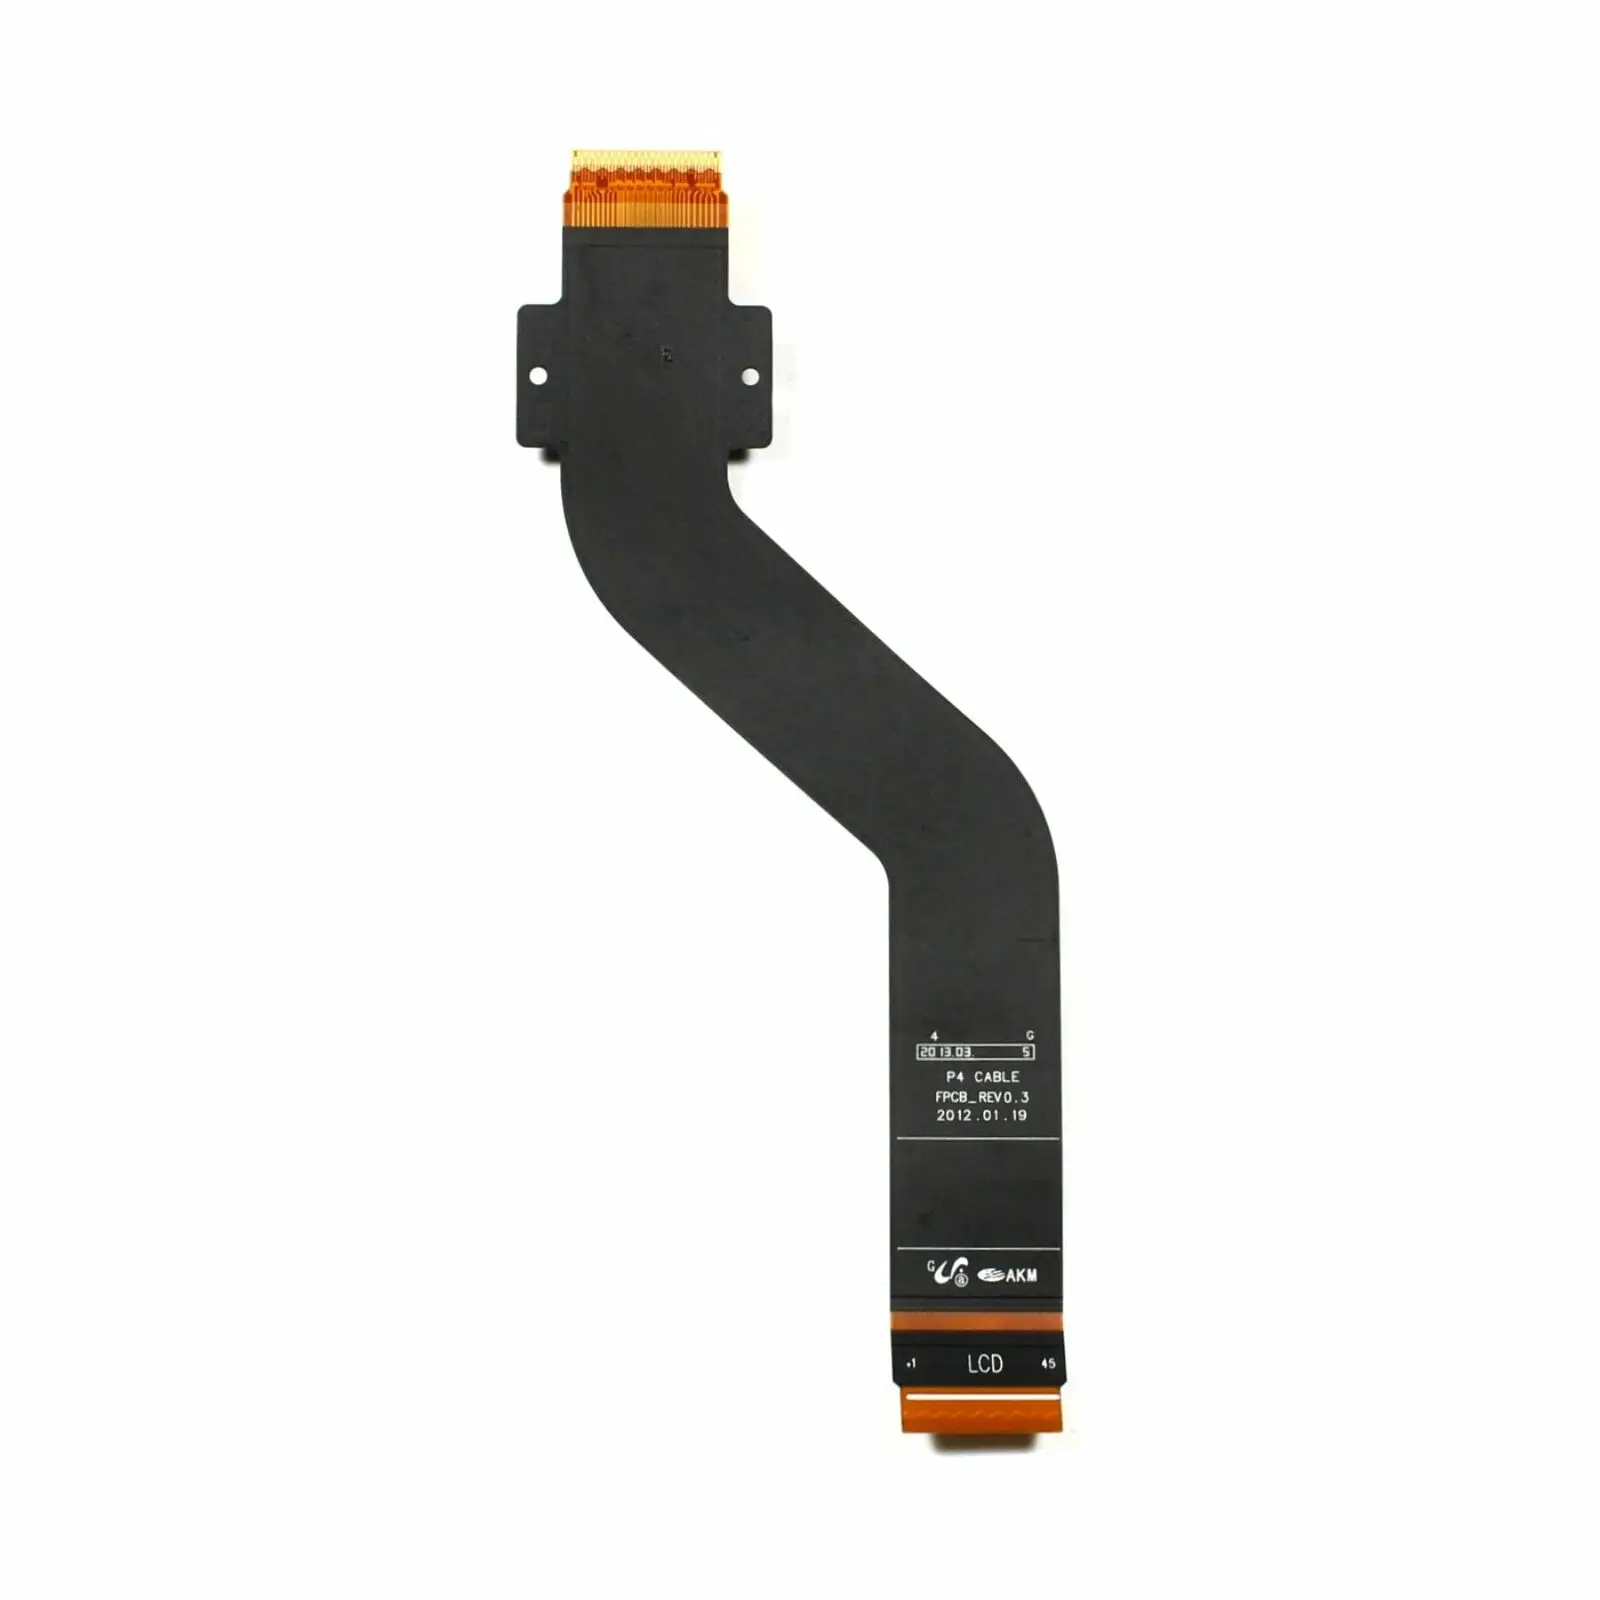 Гибкий кабель для подключения ЖК-дисплея Samsung Galaxy Note 10 1 N8000 N8010/Galaxy Tab P7500 P7510